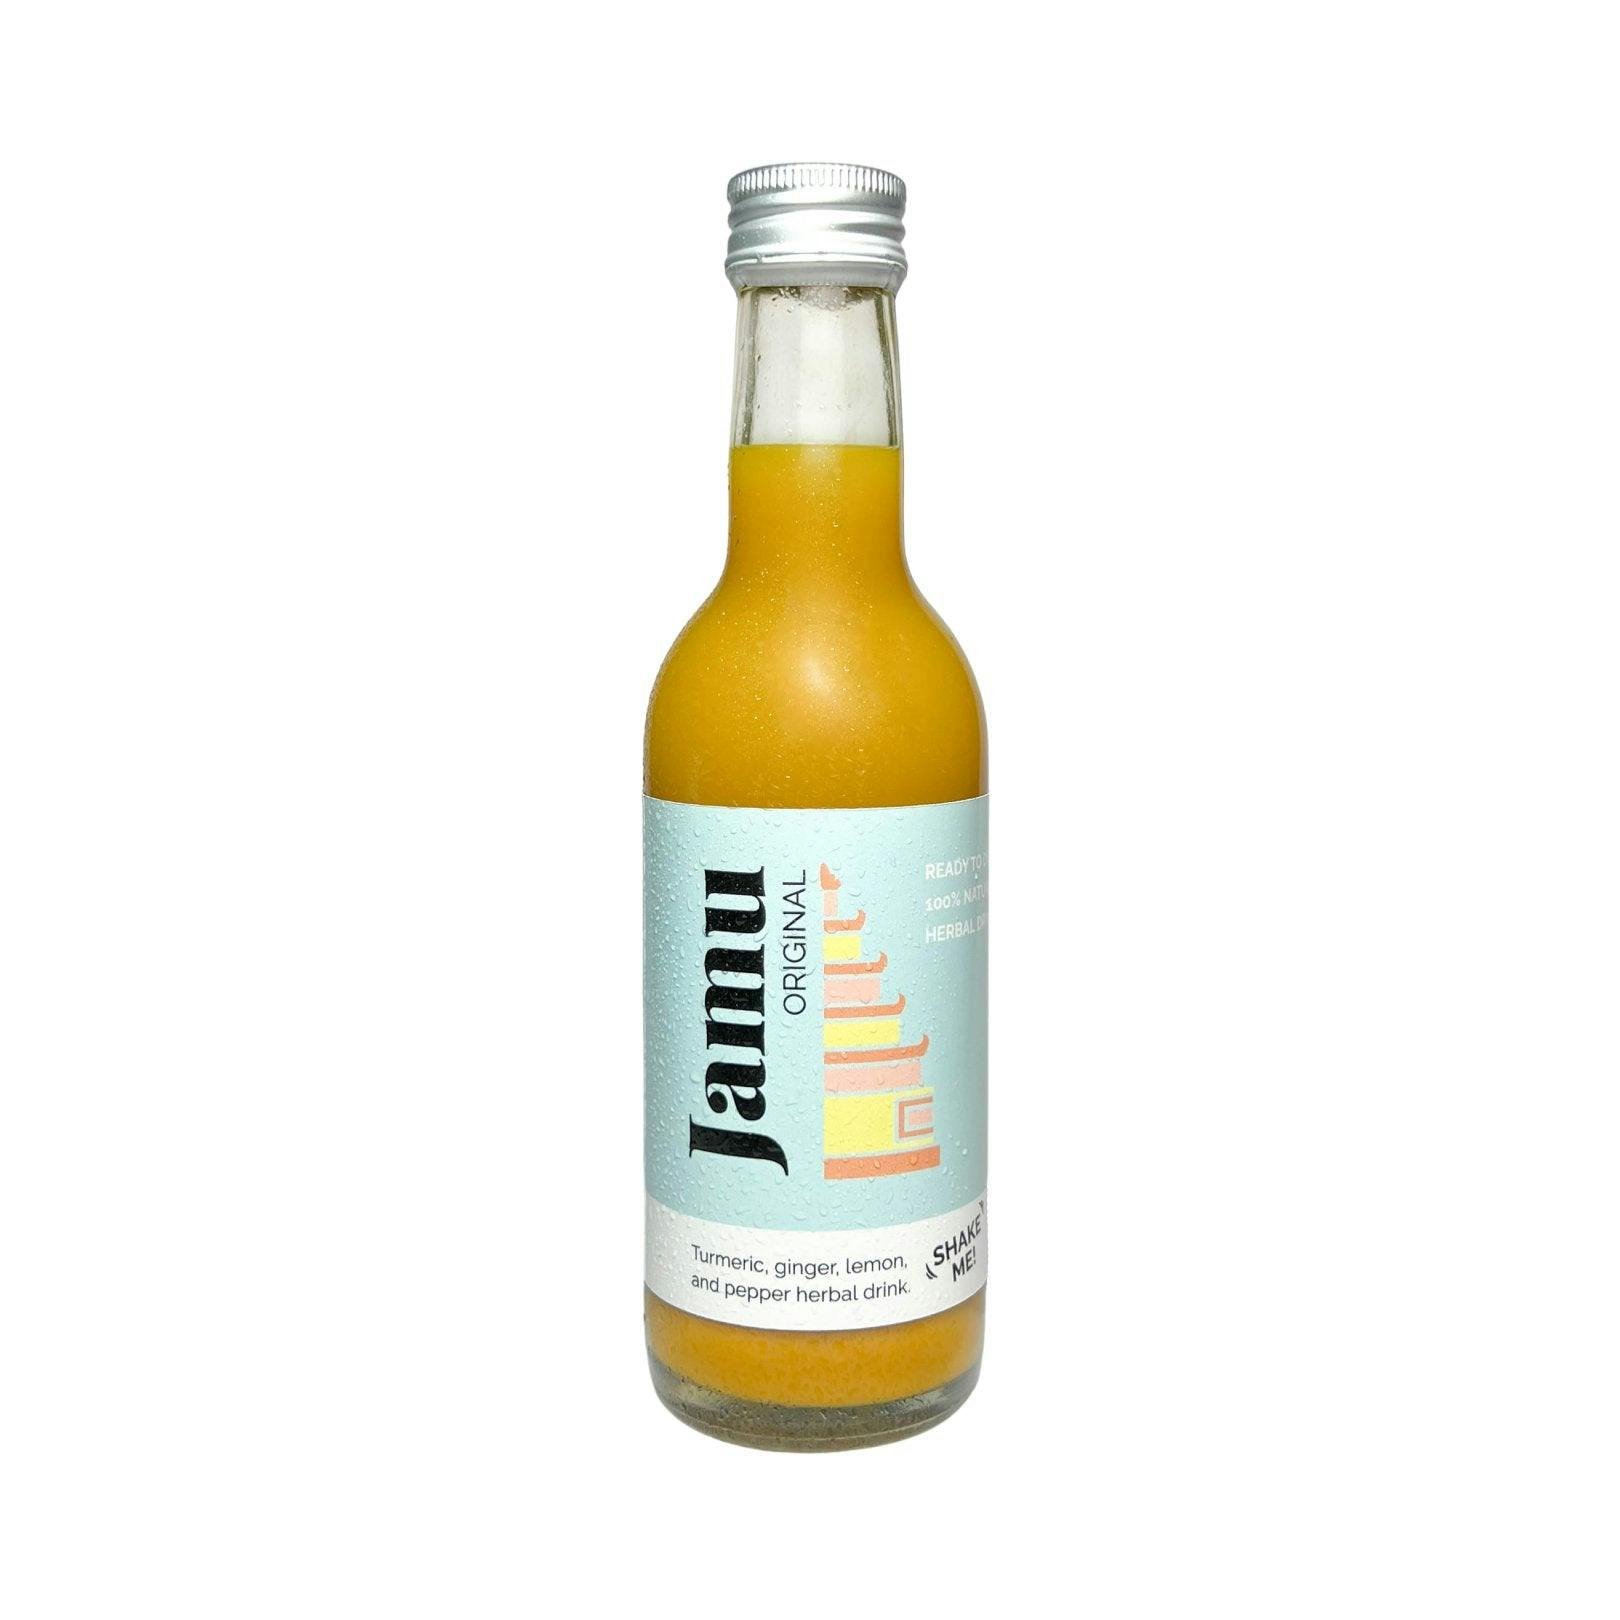 Jamu Original, boisson au curcuma, produit artisanal en vente directe en Suisse